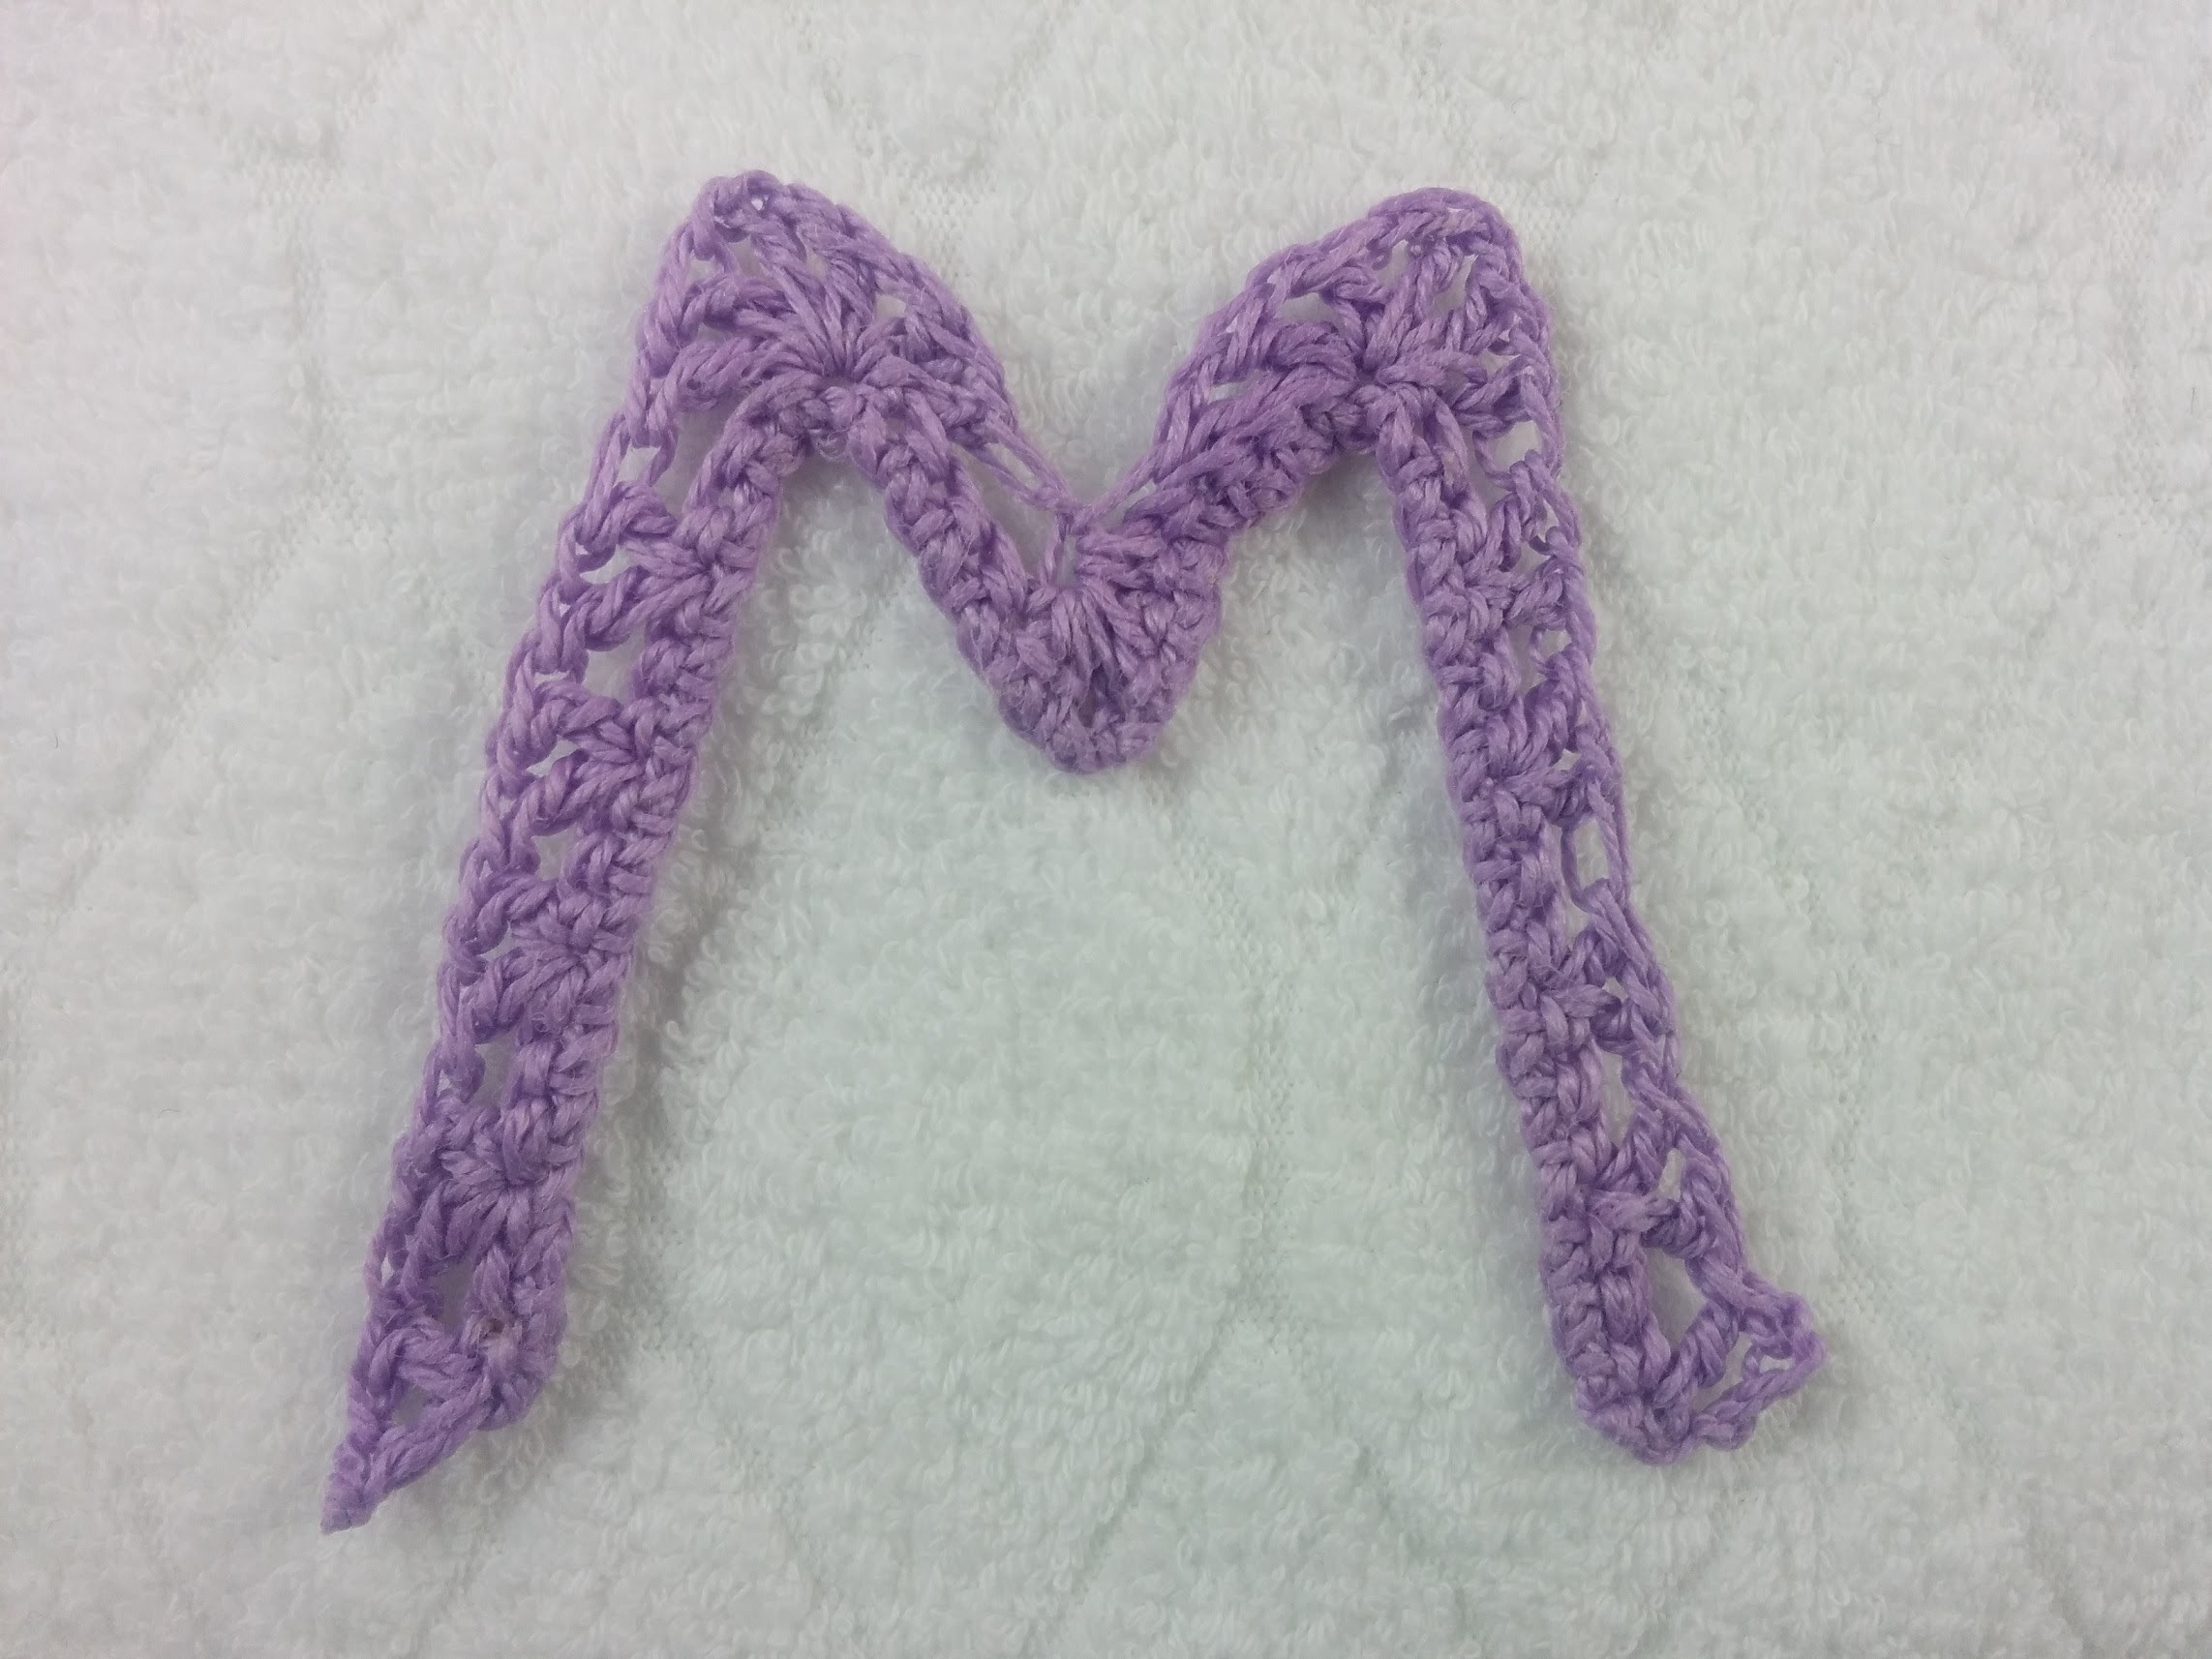 Alfabeto all'uncinetto: lettera M - Crochet Alphabet: letter M